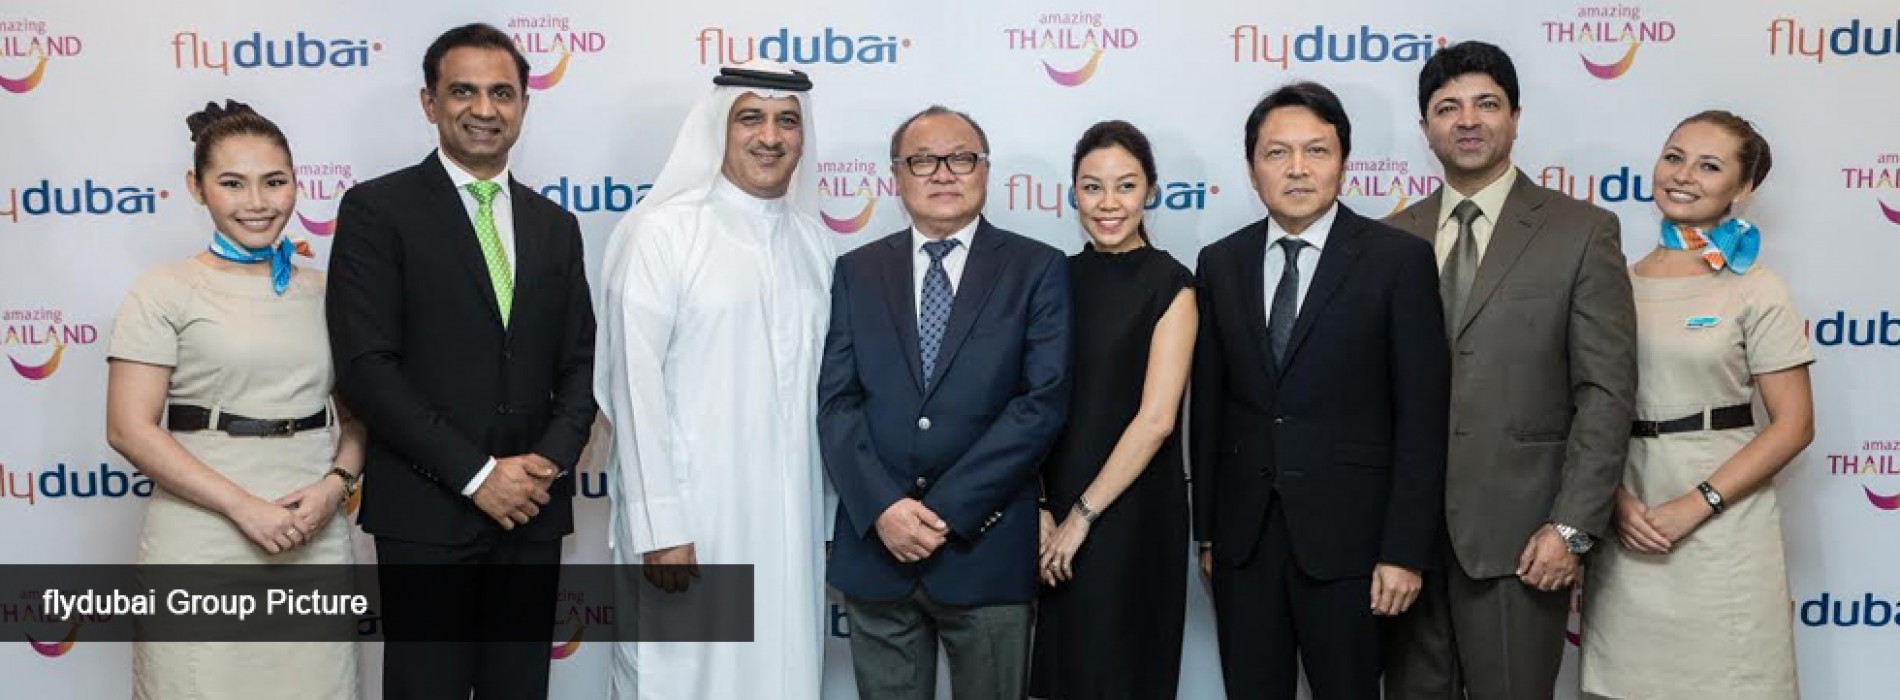 flydubai inaugurates Bangkok service